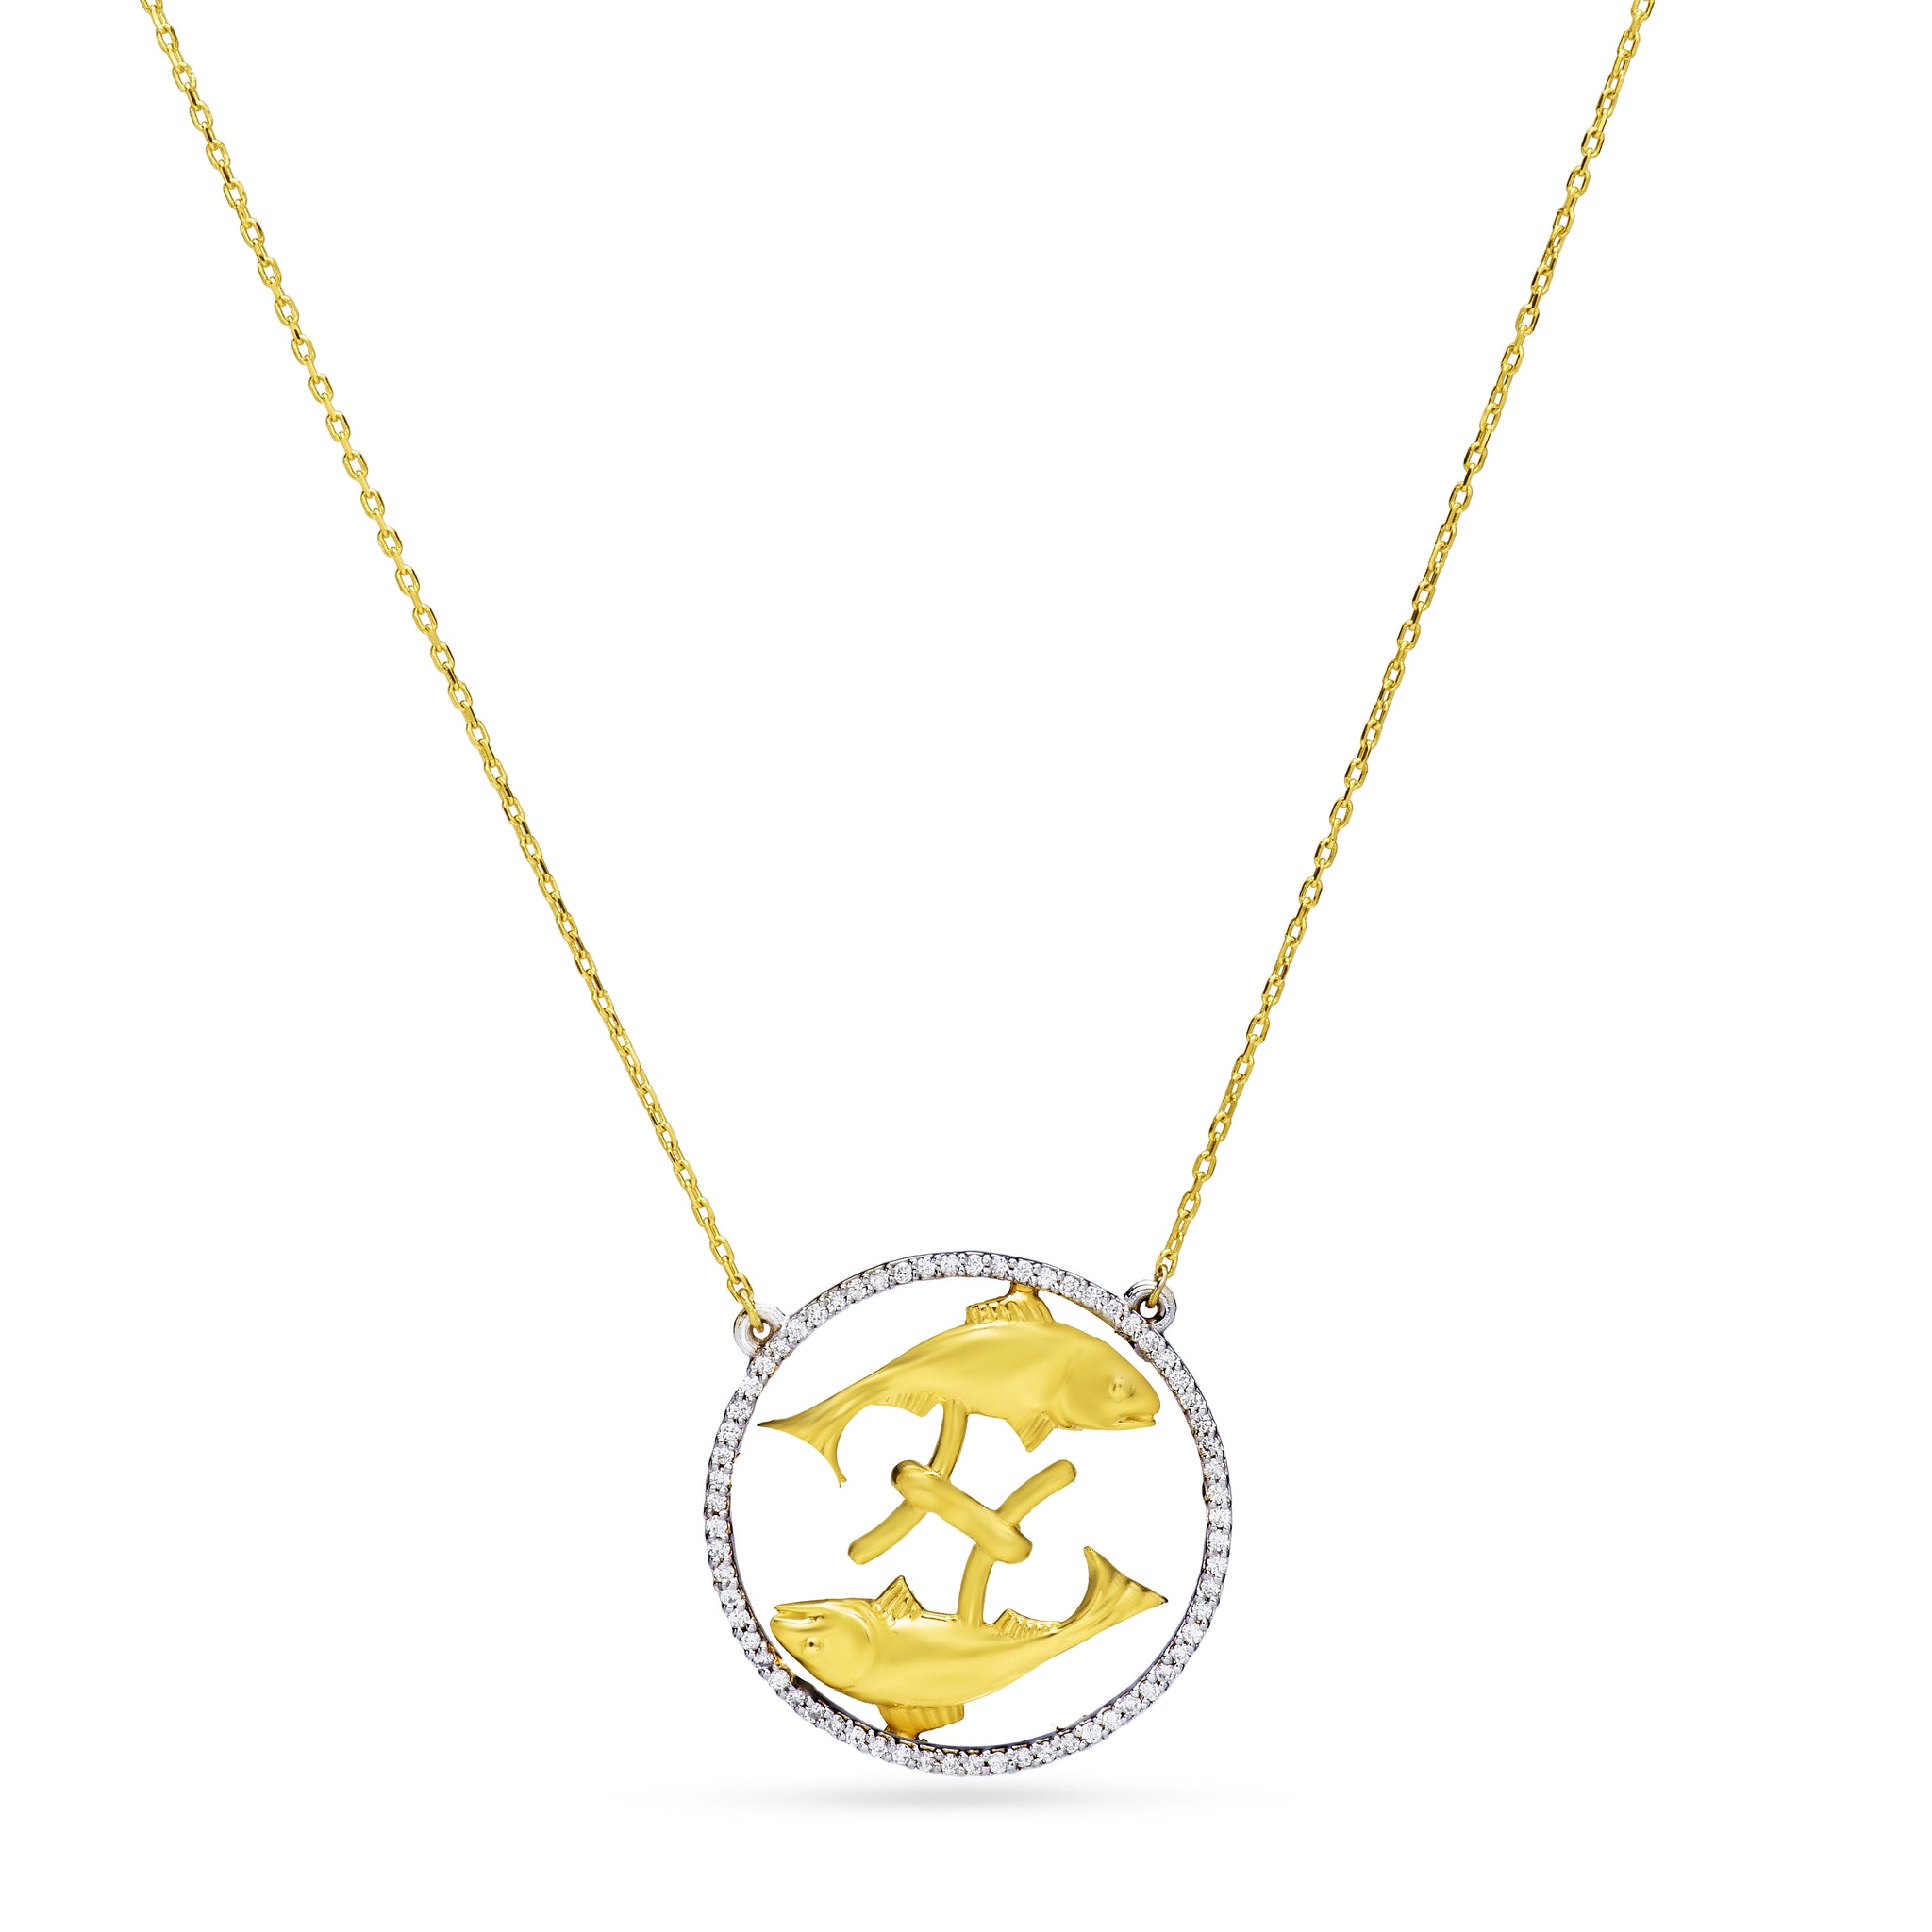 Beautiful Diamond Necklace fits you in 18K Diamond - FSPN001H